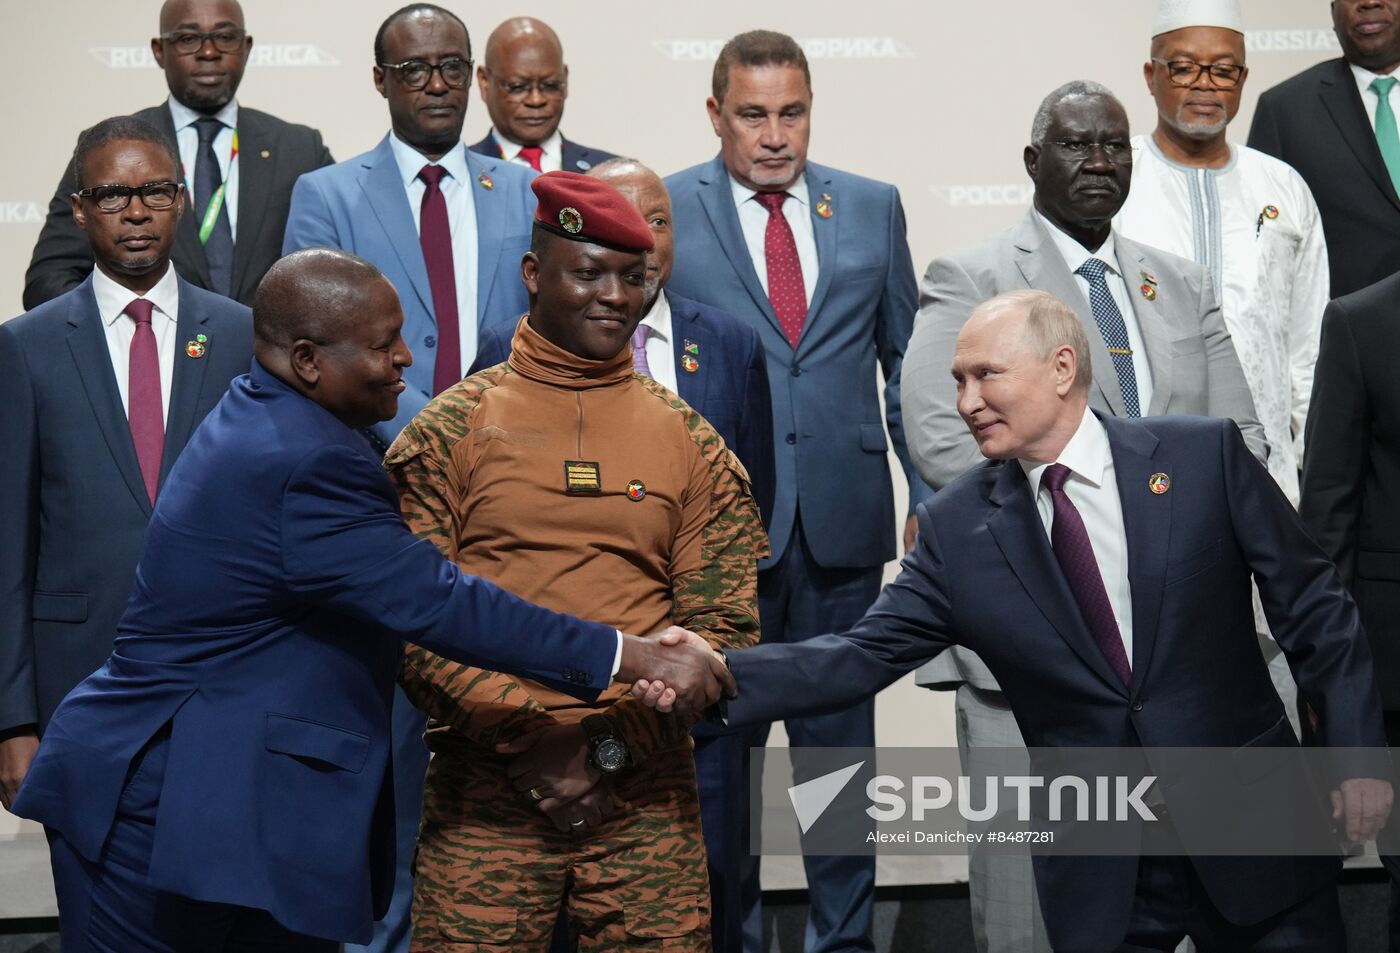 Russia Putin Africa Summit Photo Opportunity